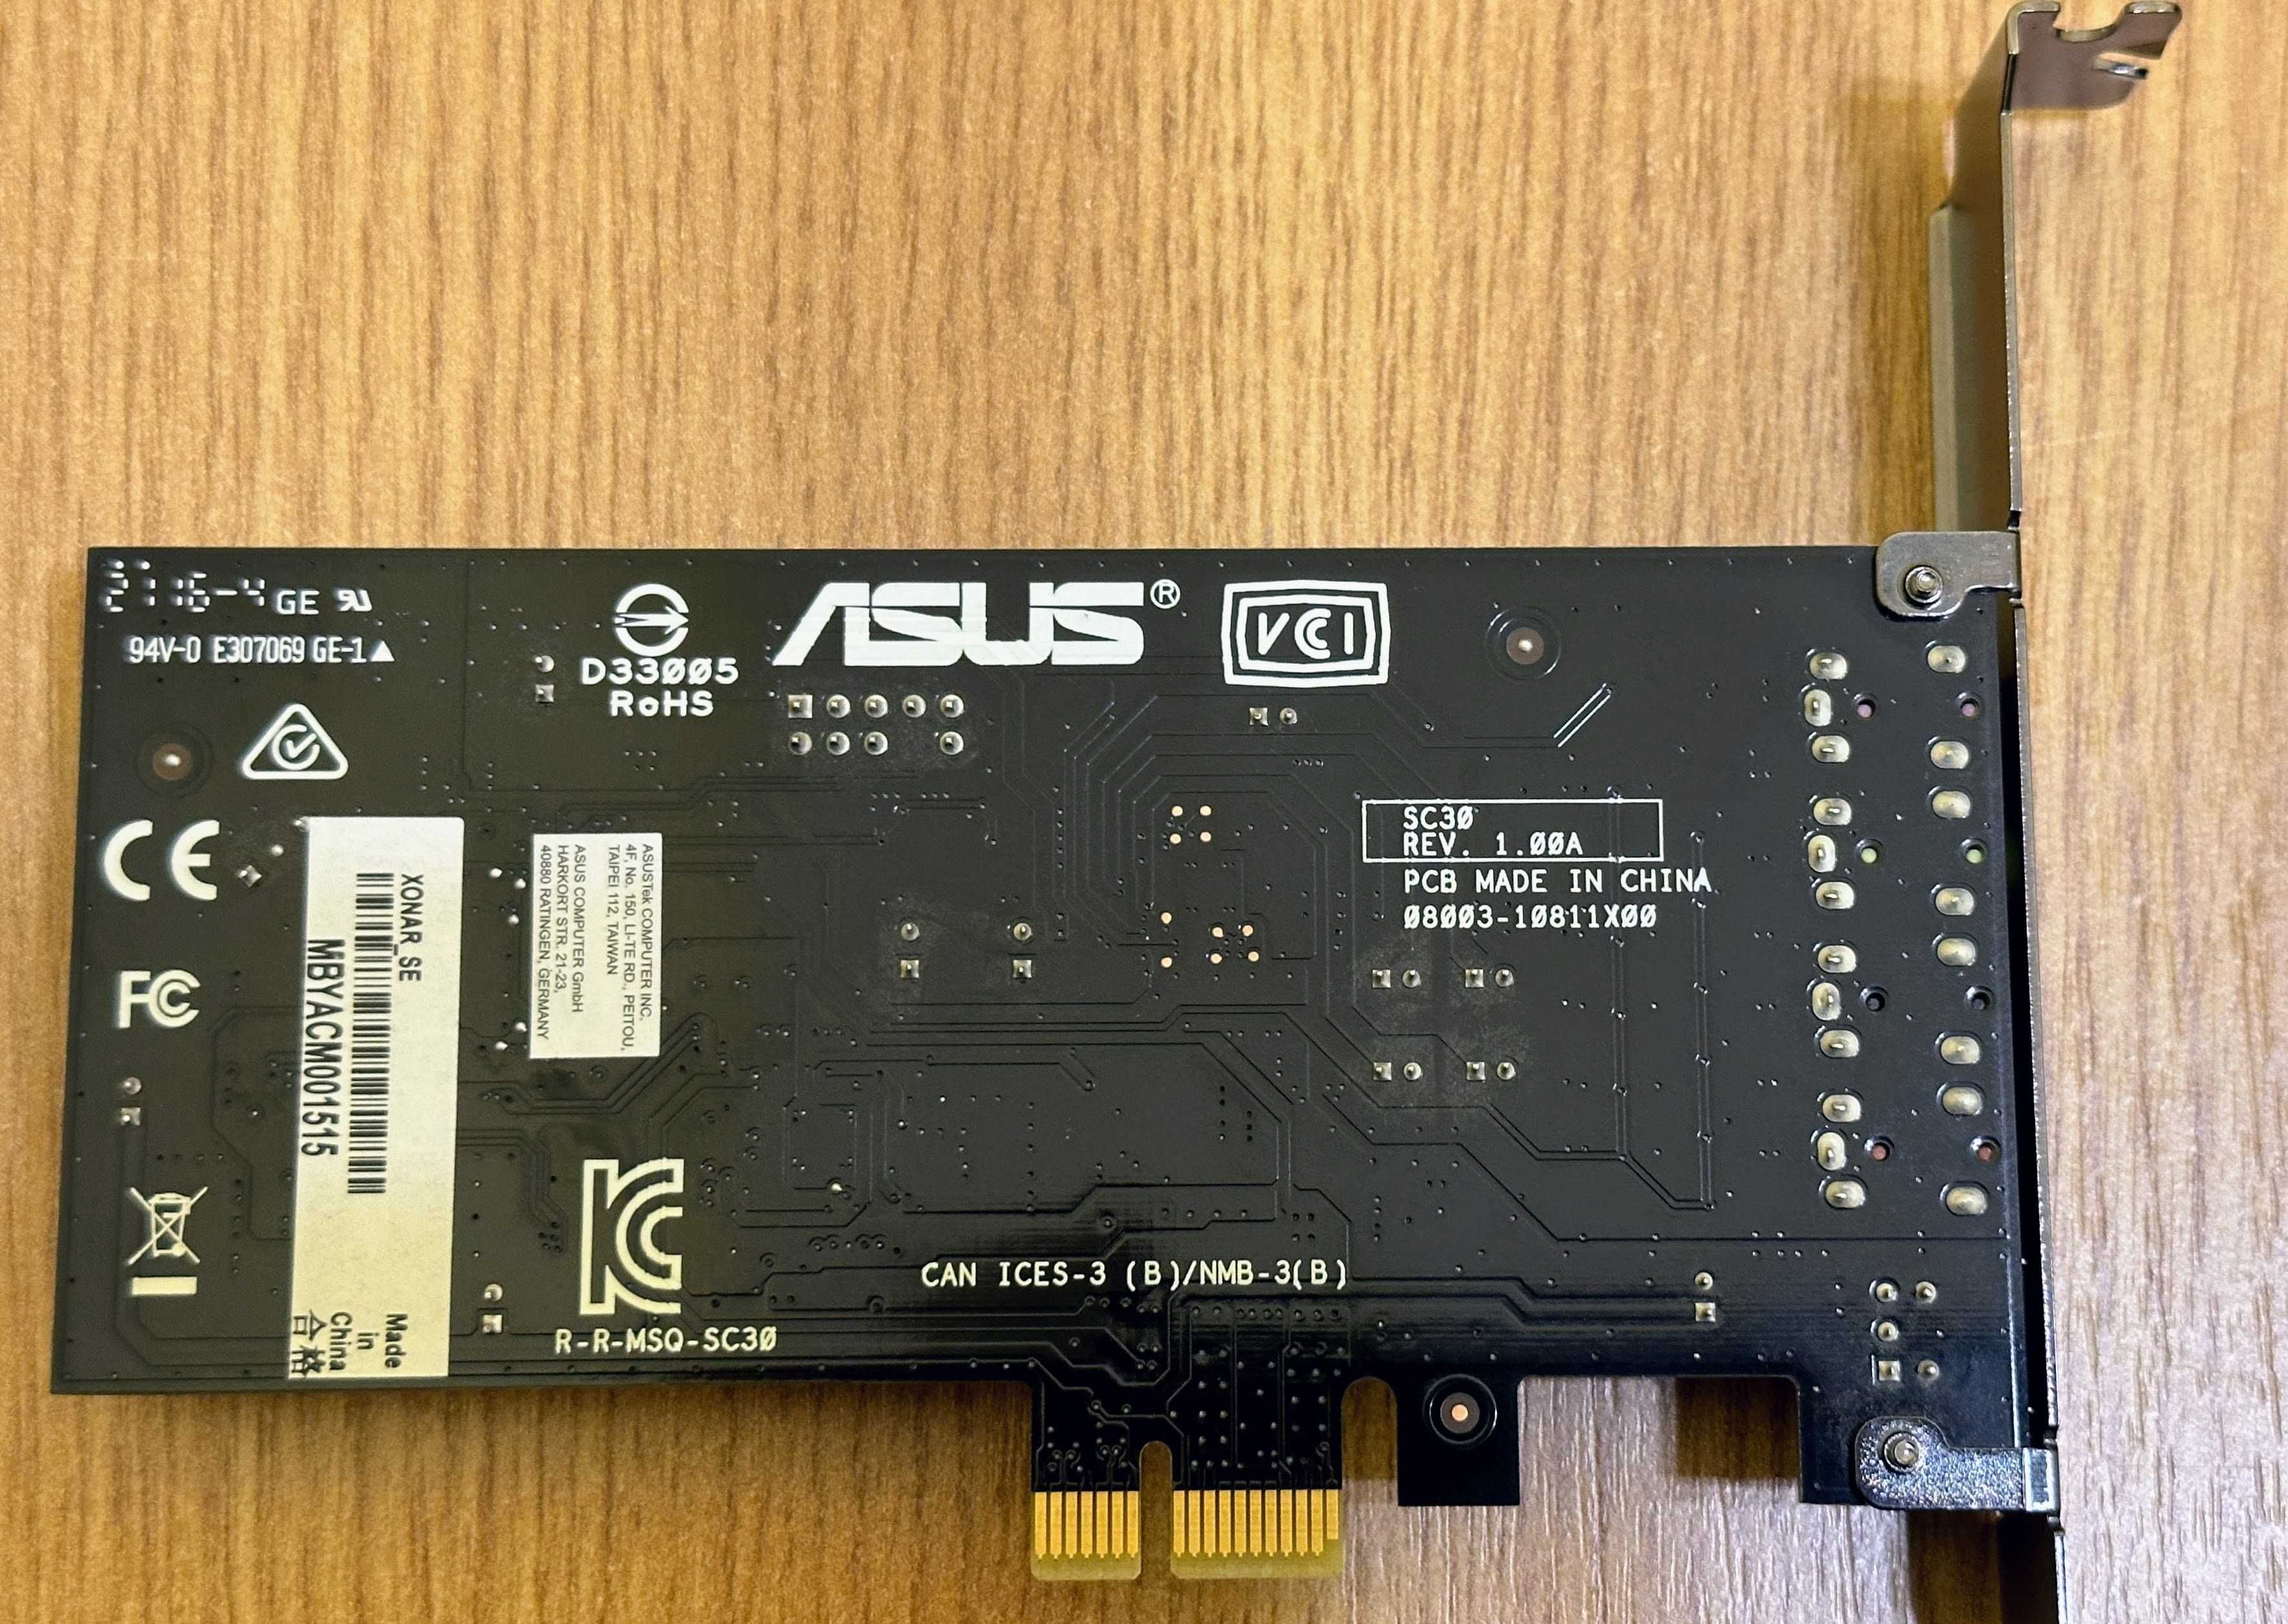 Placa de sunet ASUS Xonar SE 5.1, PCIe